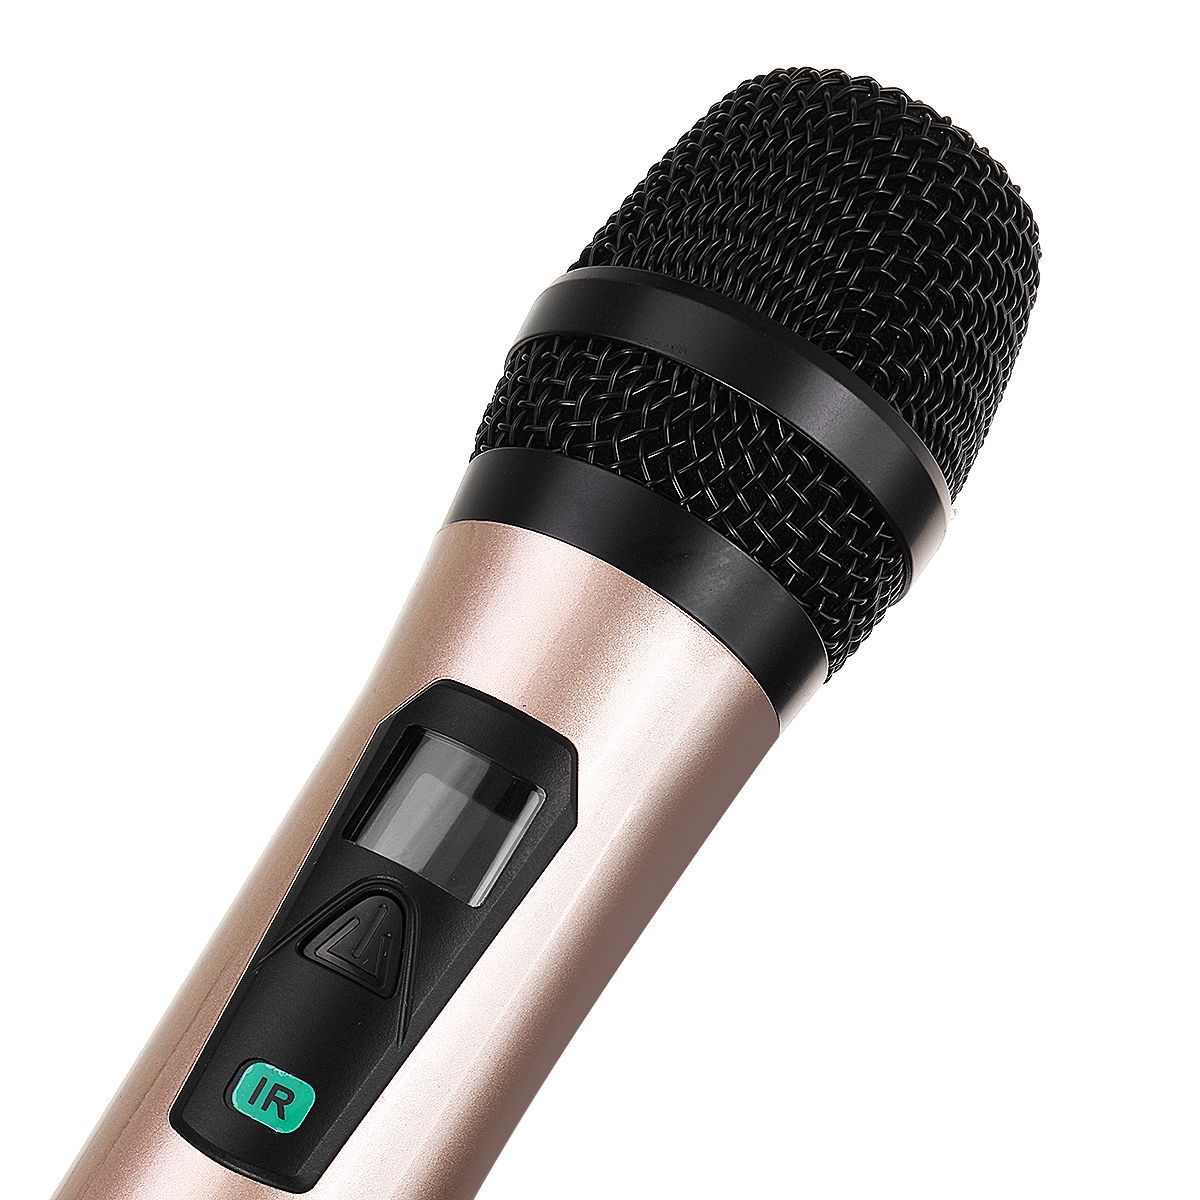 Wireless-Microphone-Mic-System-UHF-2-Channel-Dual-Handheld-Karaoke-1617360